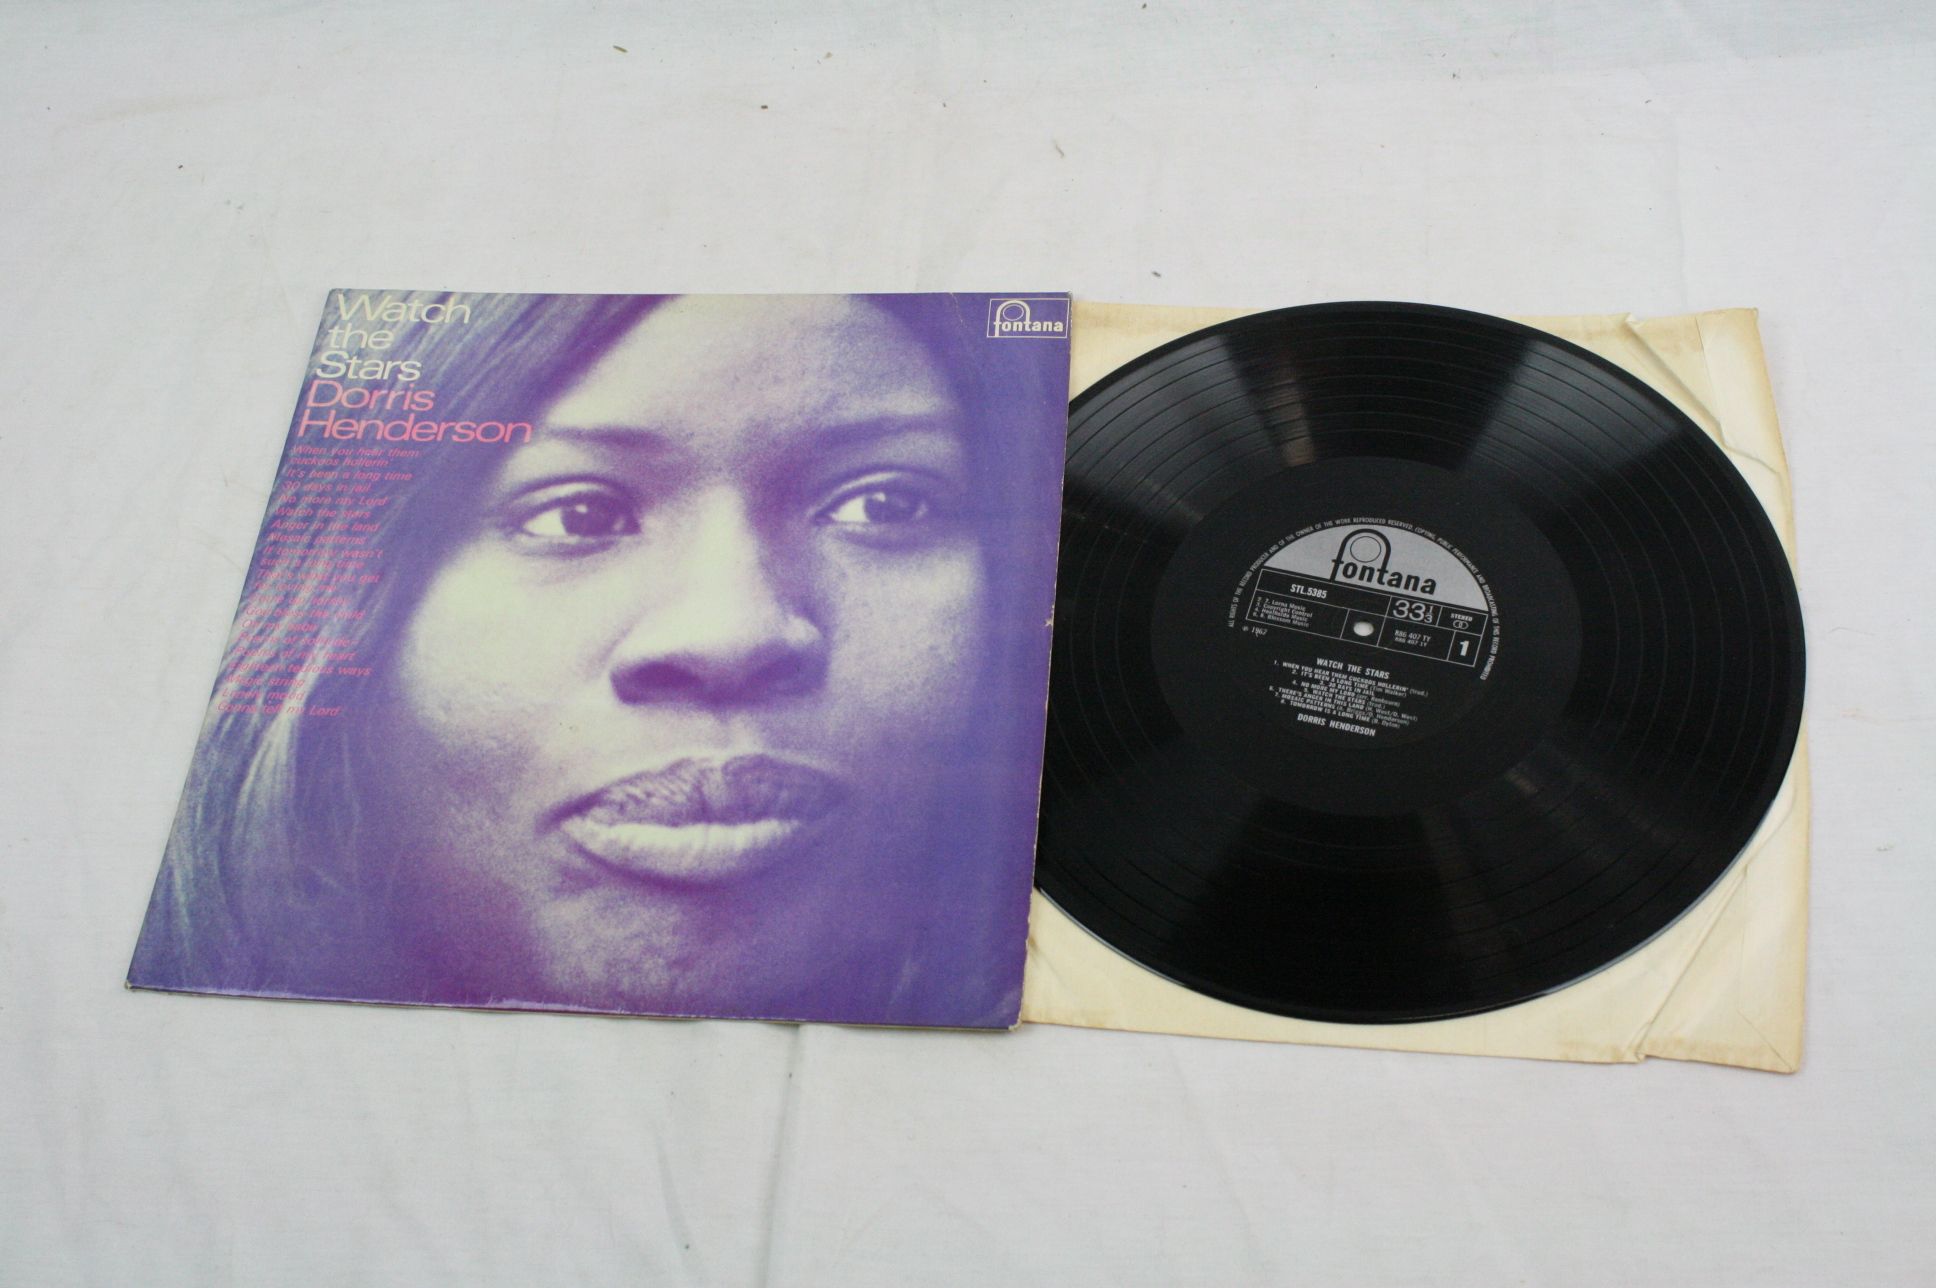 Vinyl - Dorris Henderson Watch The Stars LP on Fontana STL5385 886 407 TY sleeves and vinyl vg+ - Image 3 of 5